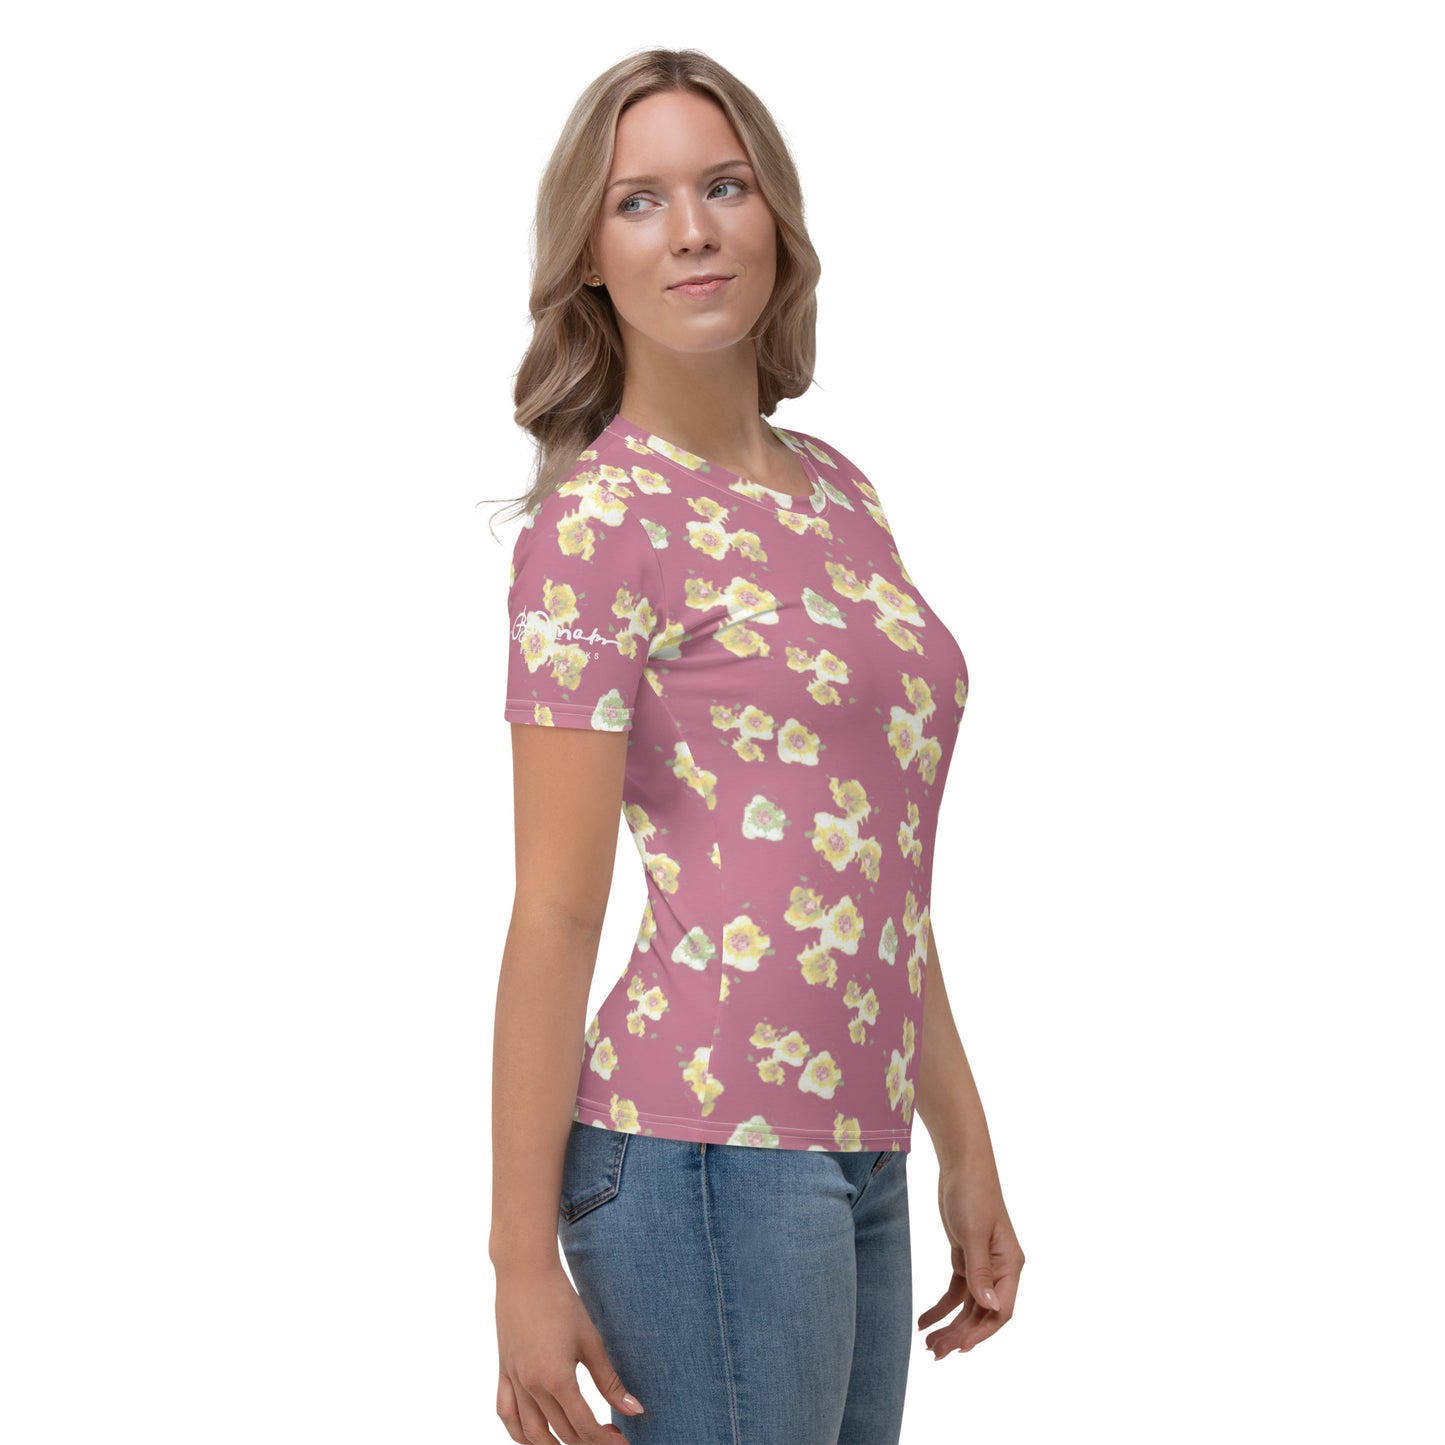 Starburst Floral Women's T-shirt